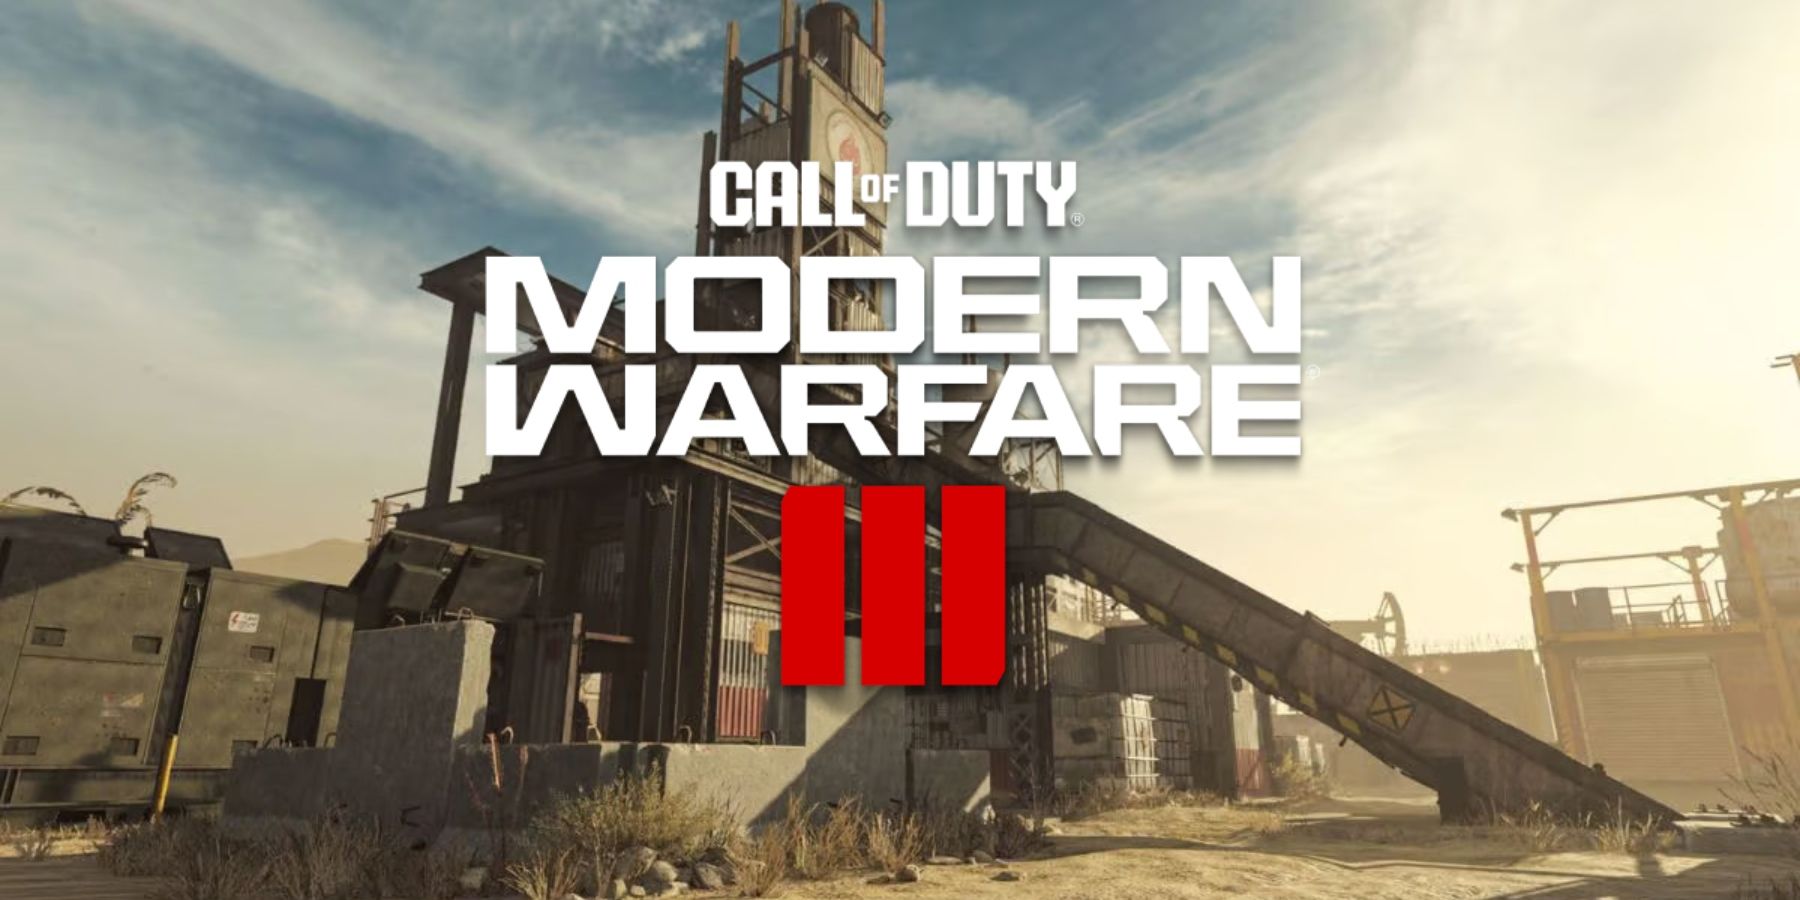 Call of Duty Modern Warfare 3 Rust map with MW3 logo